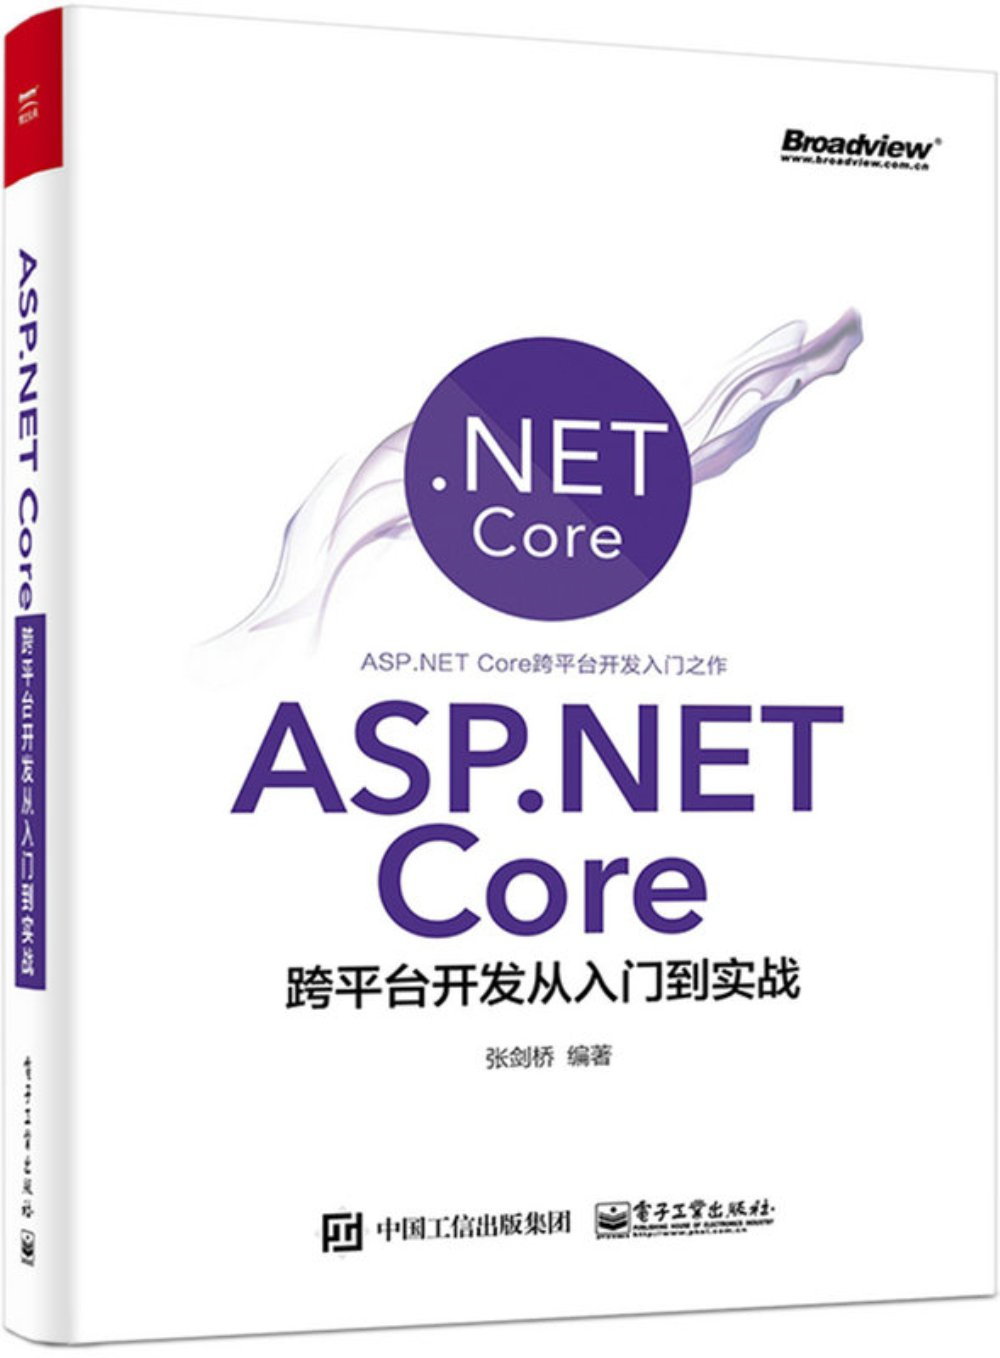 ASP.NET Core跨平台開發從入門到實戰